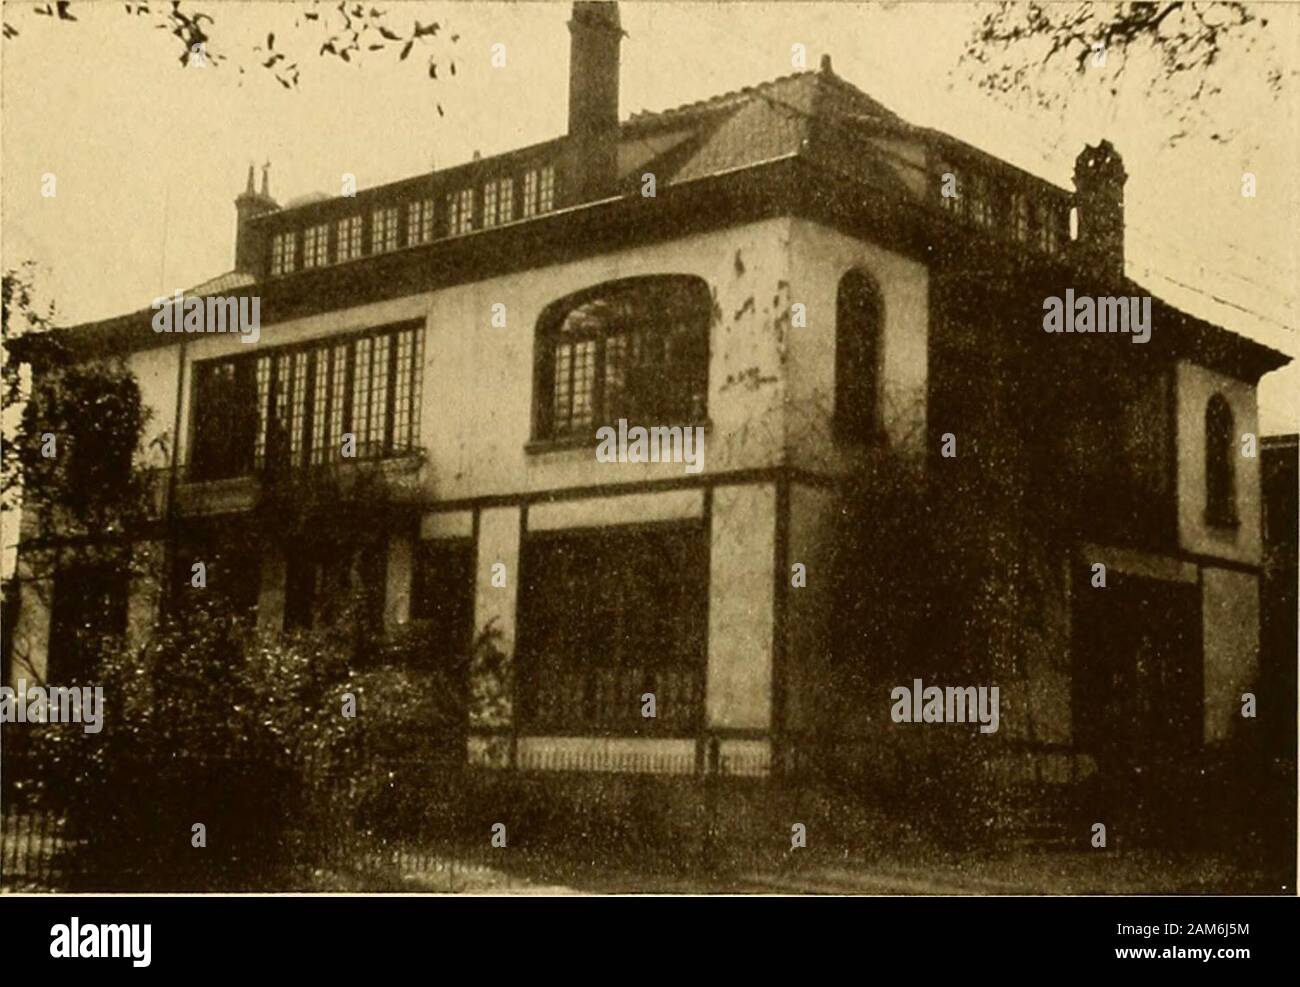 Jambalaya [yearbook] 1917 . NEWCOMB POTTERY BUILDING i^ S^ Stock Photo